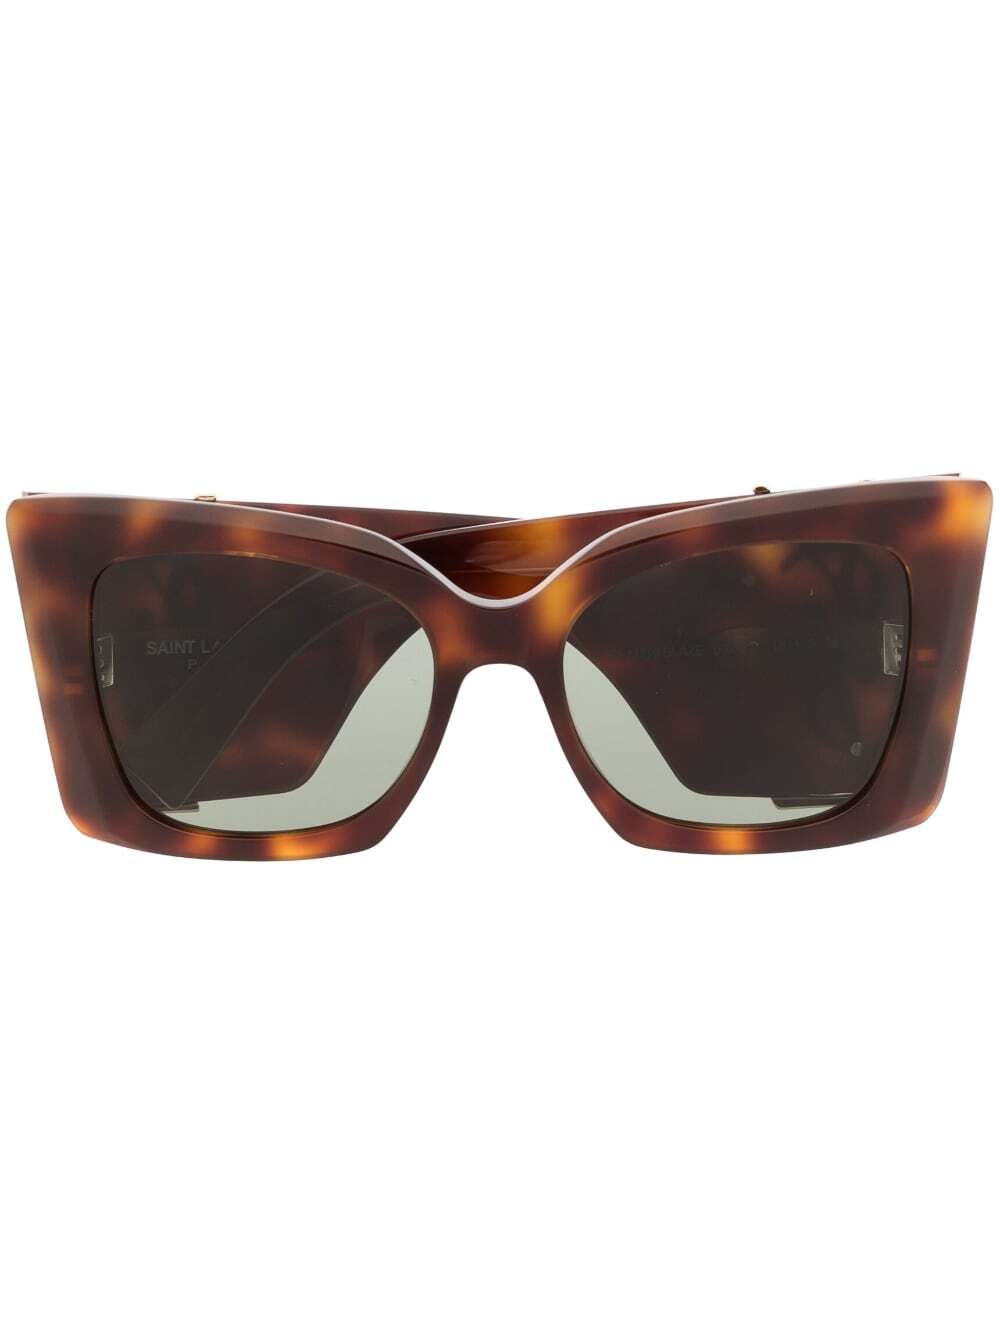 SL M119 sunglasses